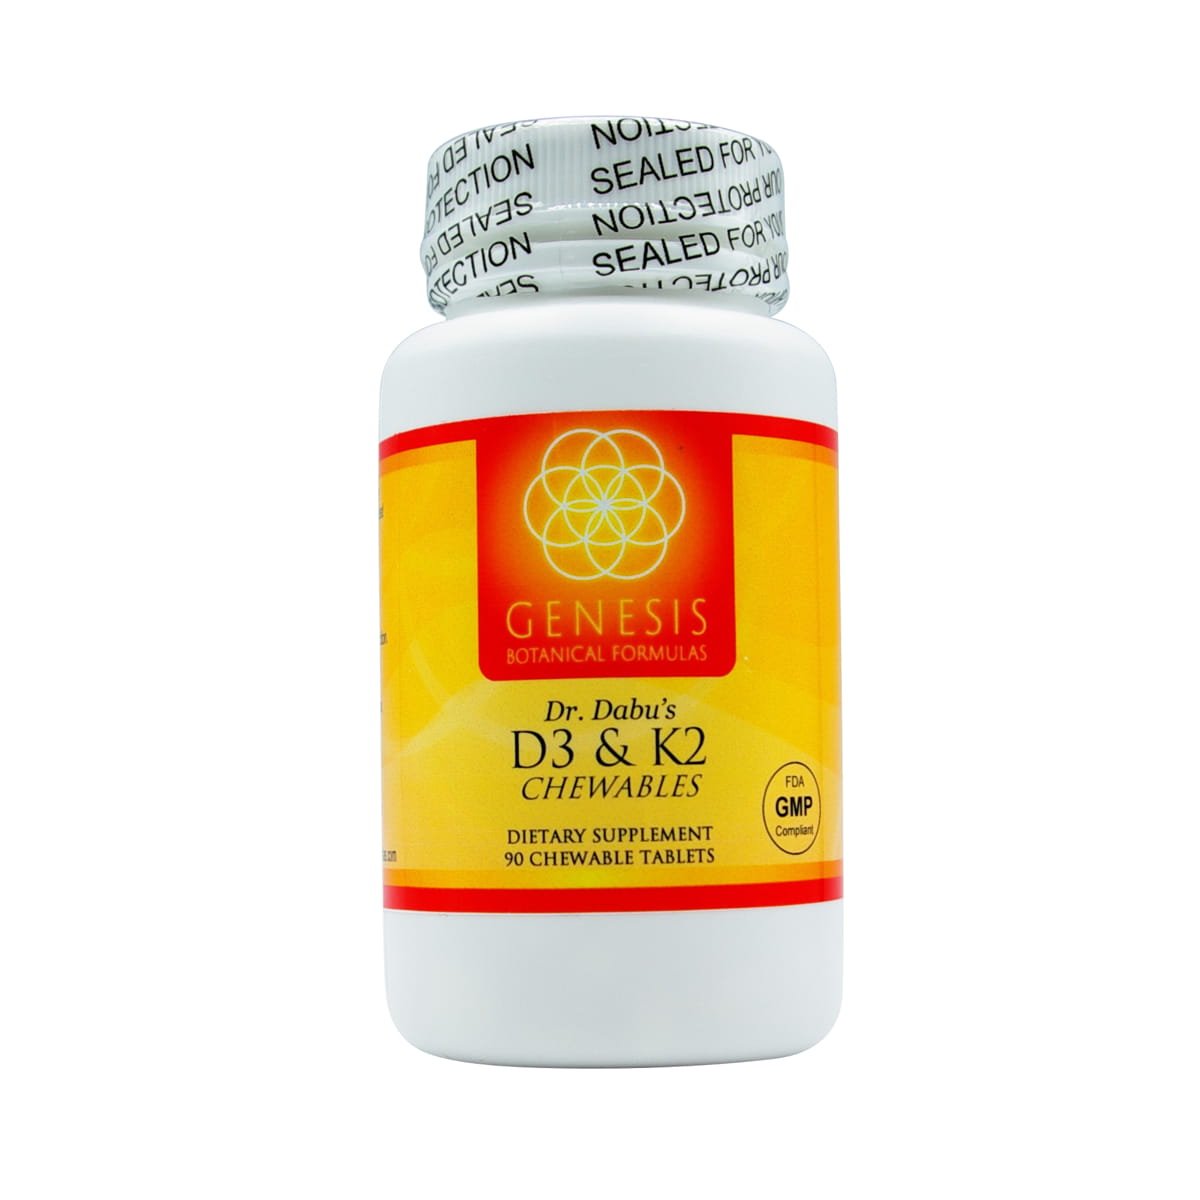 Vitamin D3 2000 IU & K2: (Chewable)